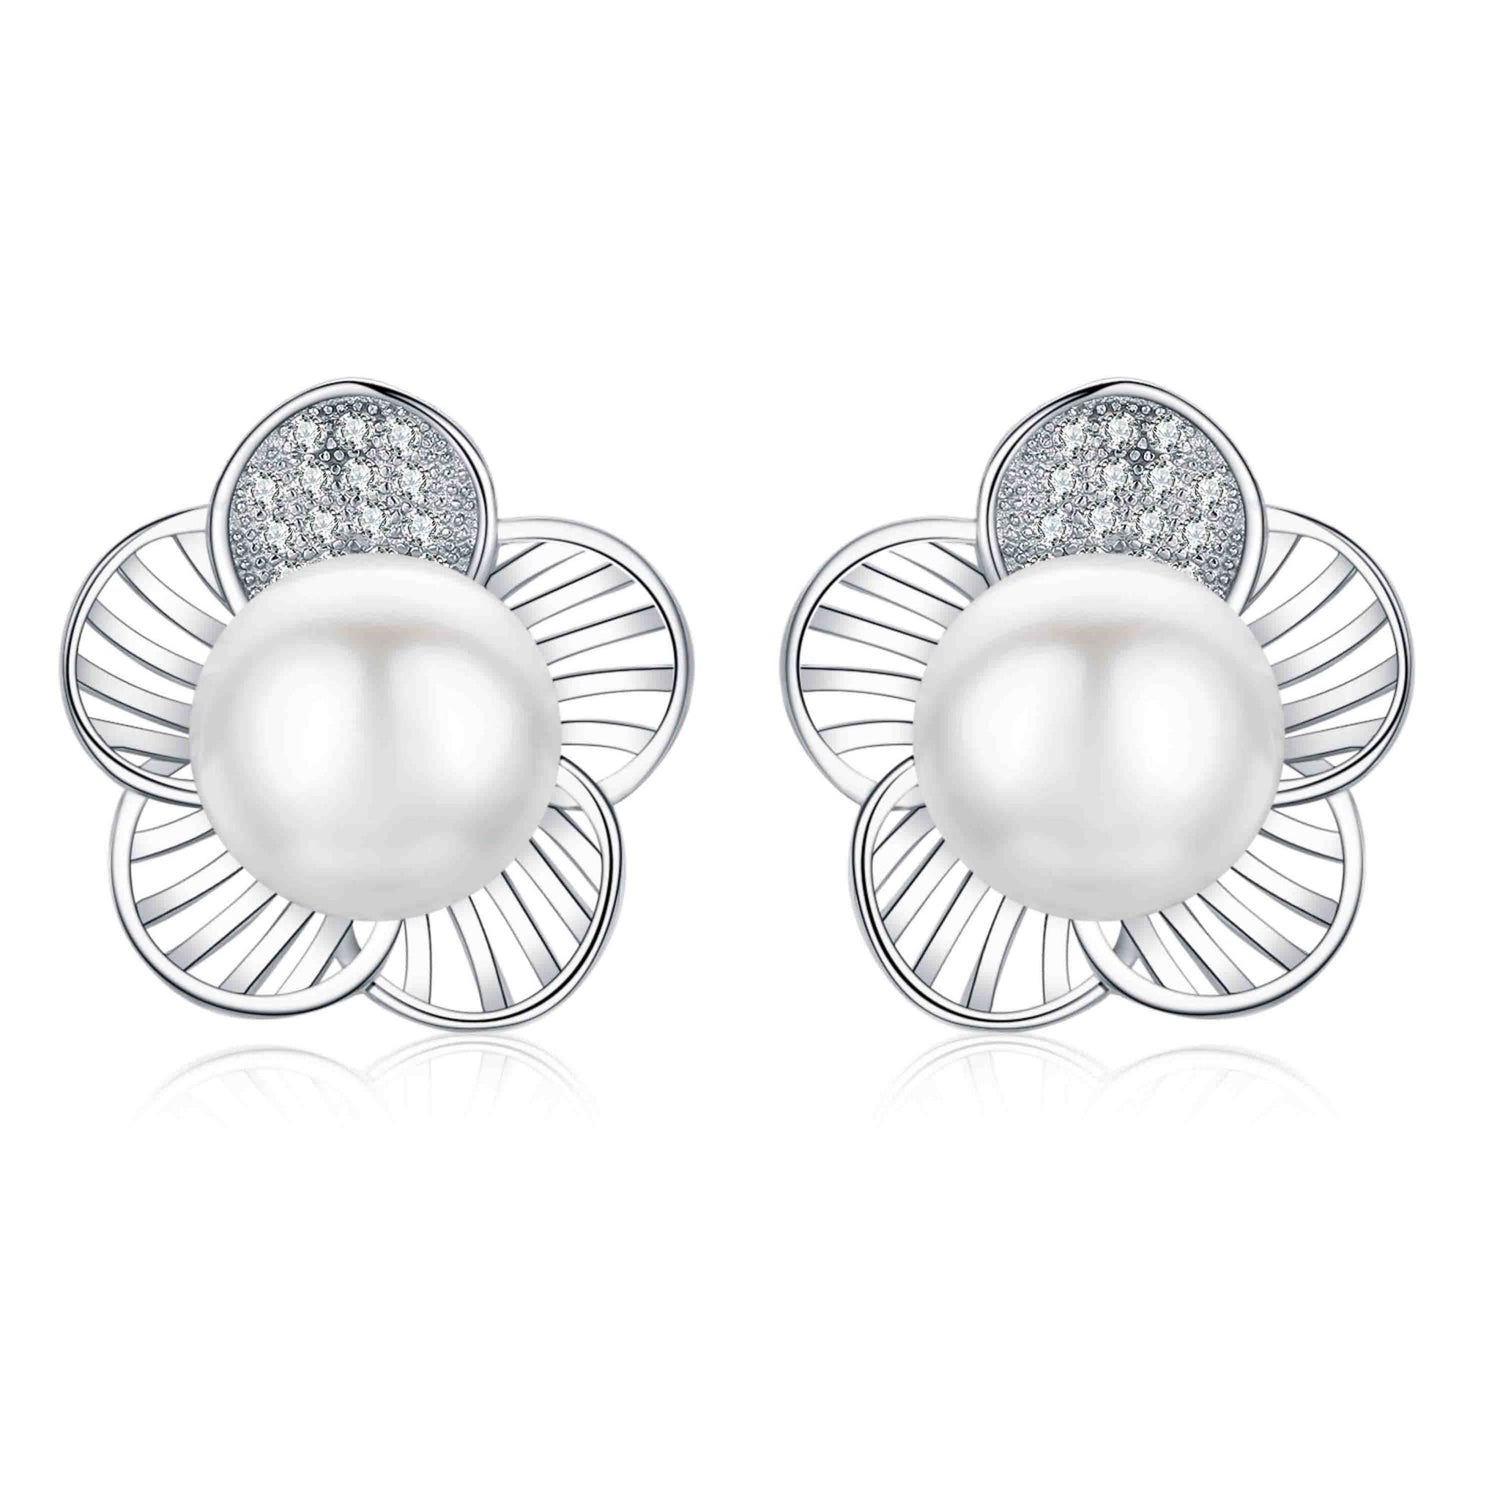 Glitter flower pearl earrings - Timeless Pearl